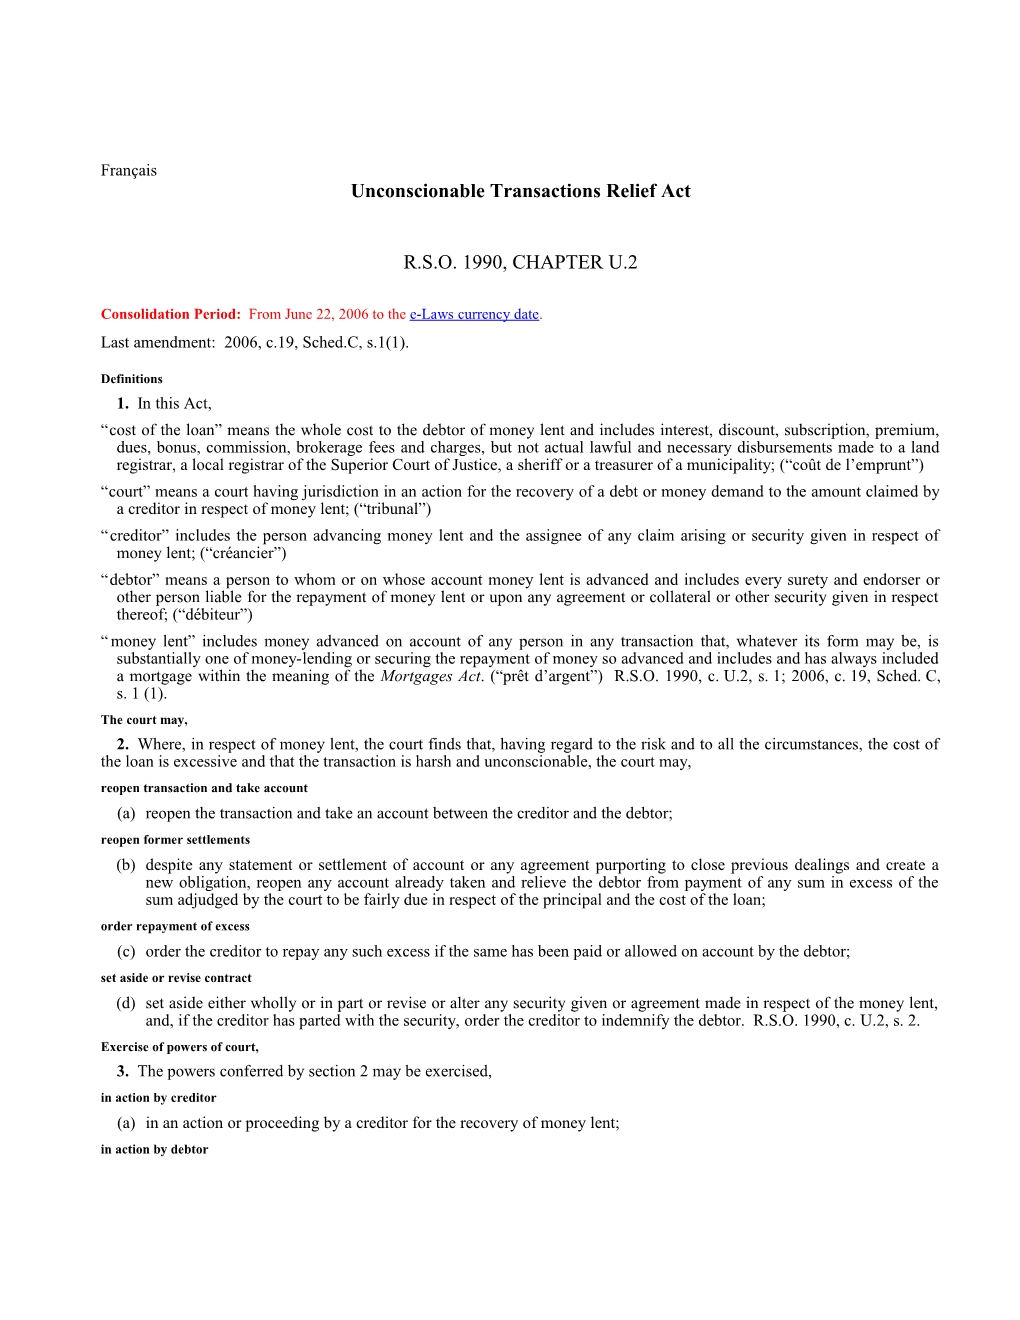 Unconscionable Transactions Relief Act, R.S.O. 1990, C. U.2